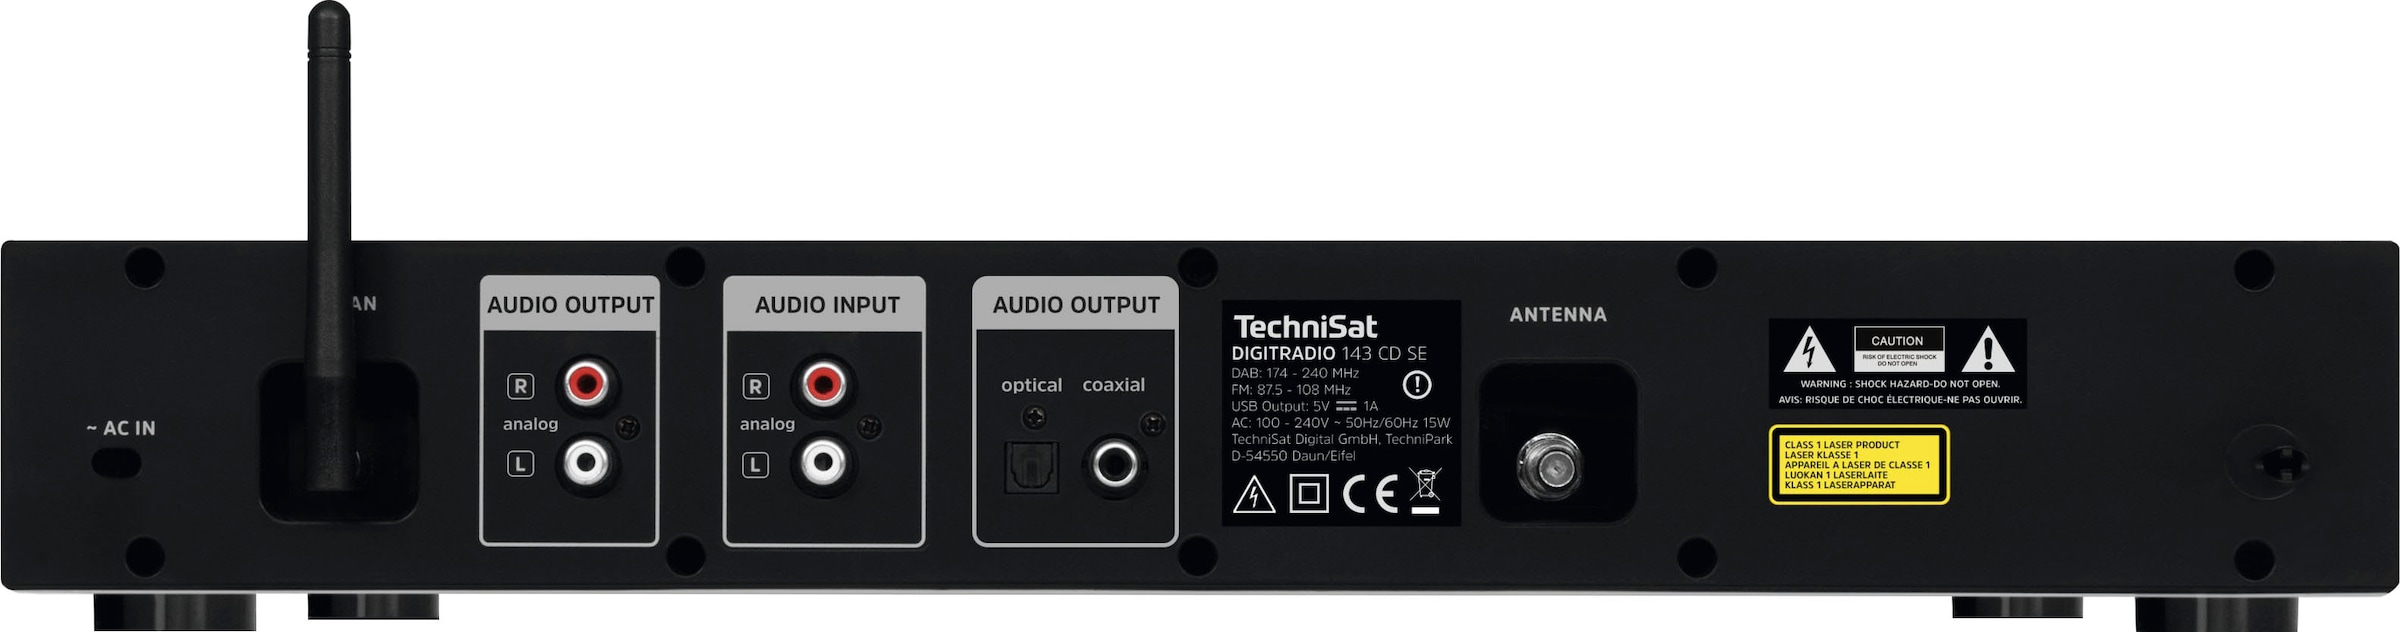 TechniSat Digitalradio »DIGITRADIO mit CD RDS) Internetradio-Digitalradio jetzt (V3)«, 143 (DAB+)-UKW (DAB+) bei (Bluetooth-WLAN OTTO bestellen